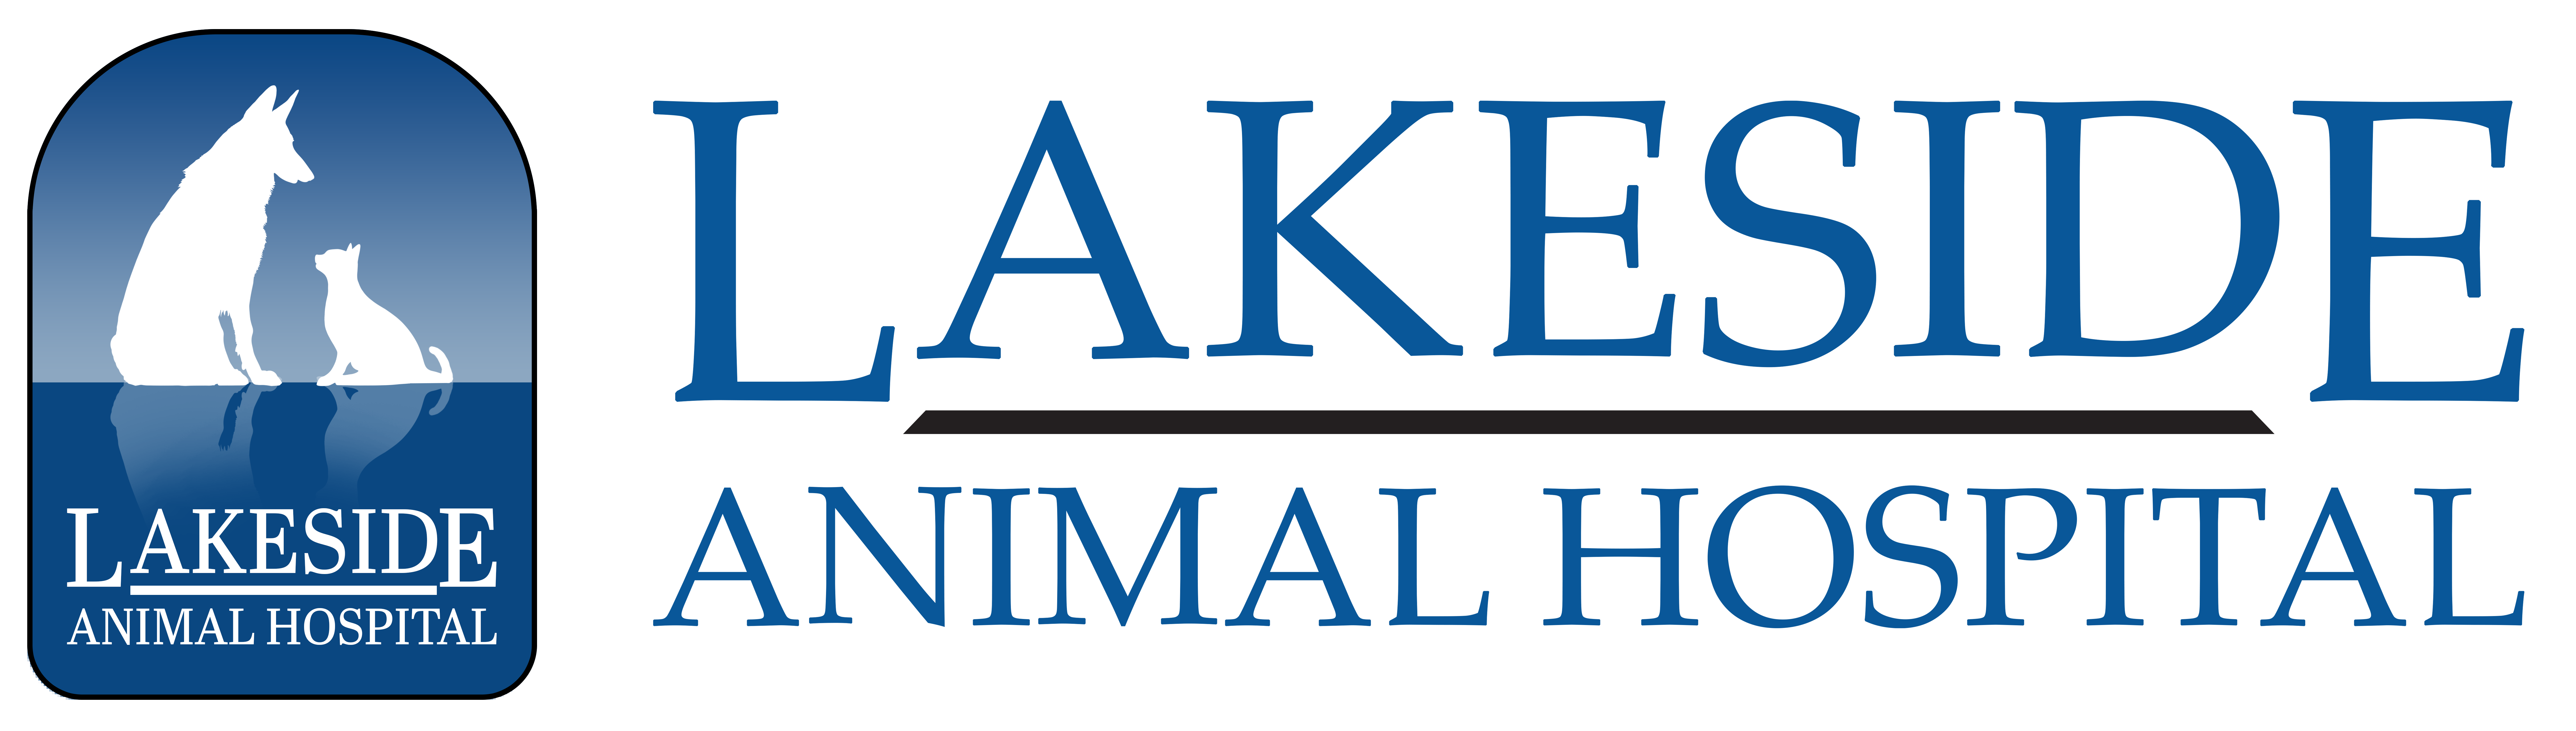 lakeside animal hospital logo